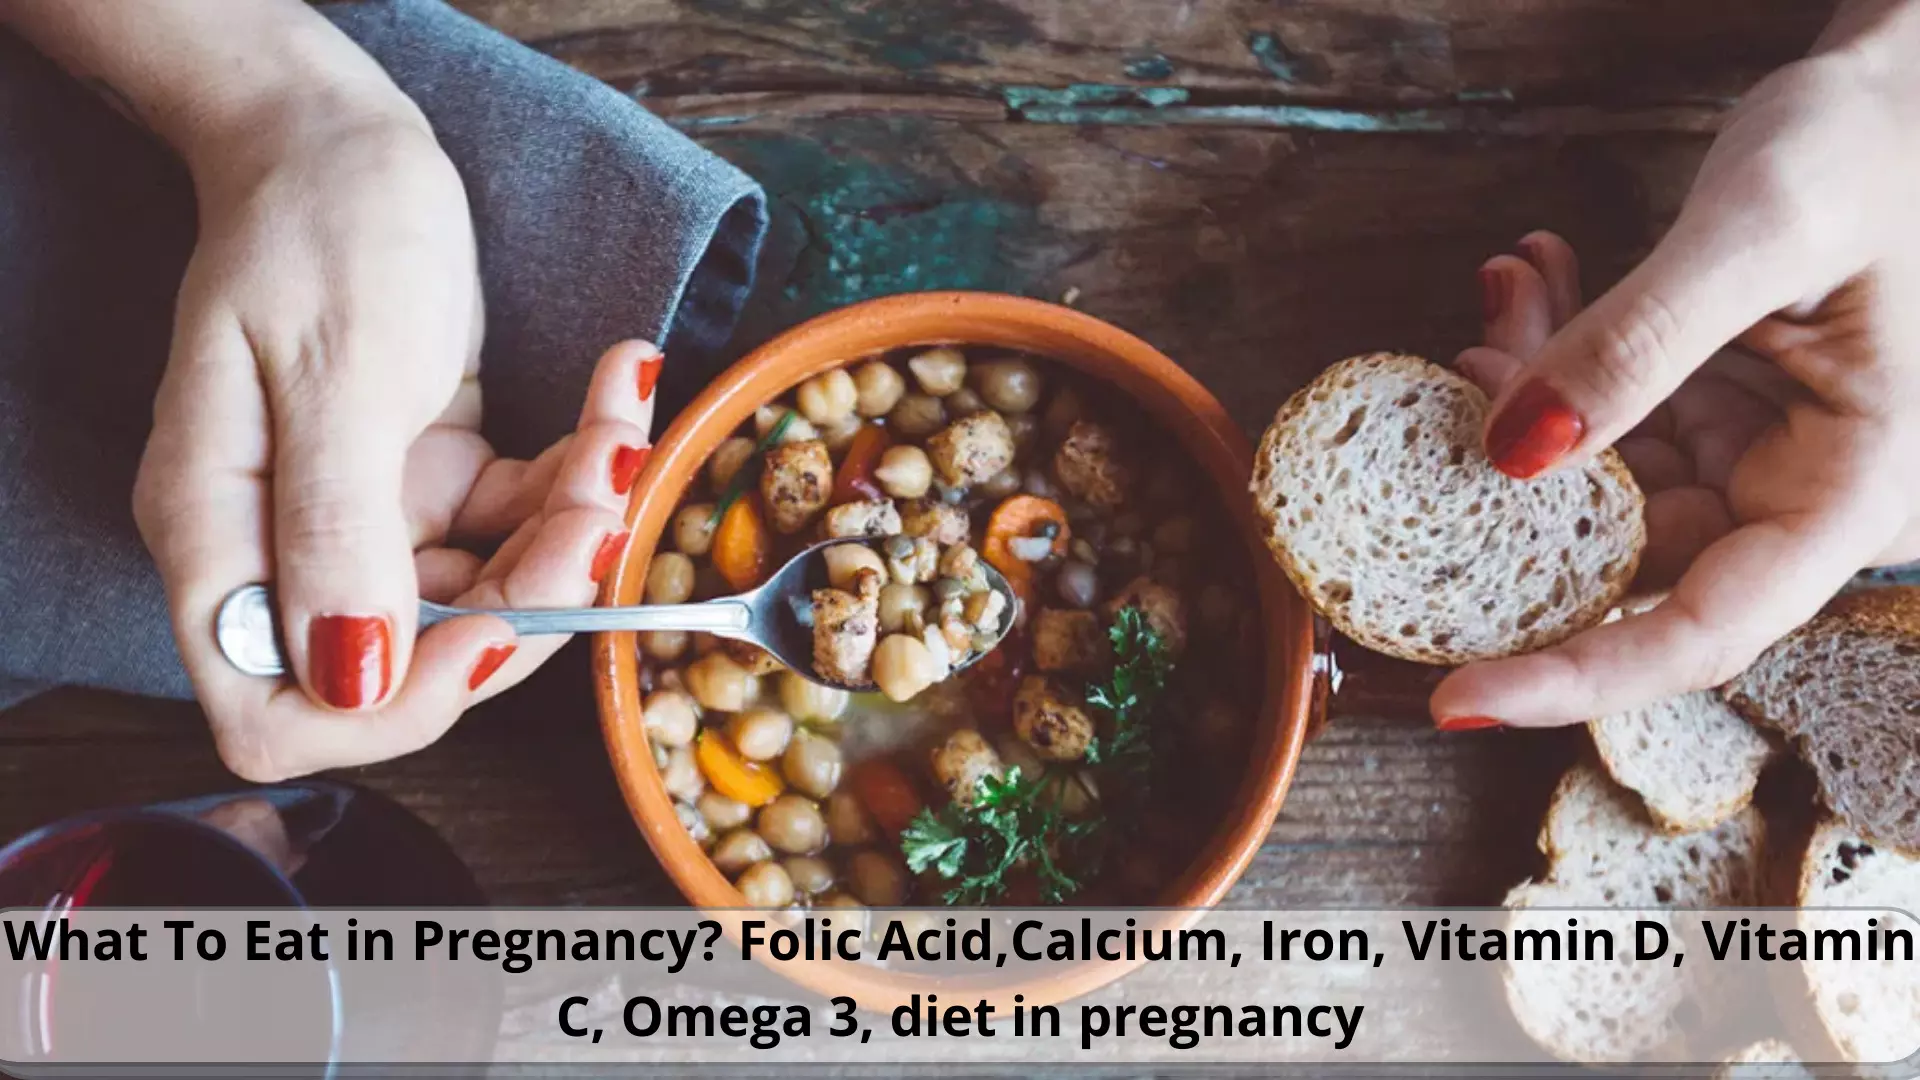 What To Eat in Pregnancy? Folic Acid,Calcium, Iron, Vitamin D, Vitamin C, Omega 3, diet in pregnancy